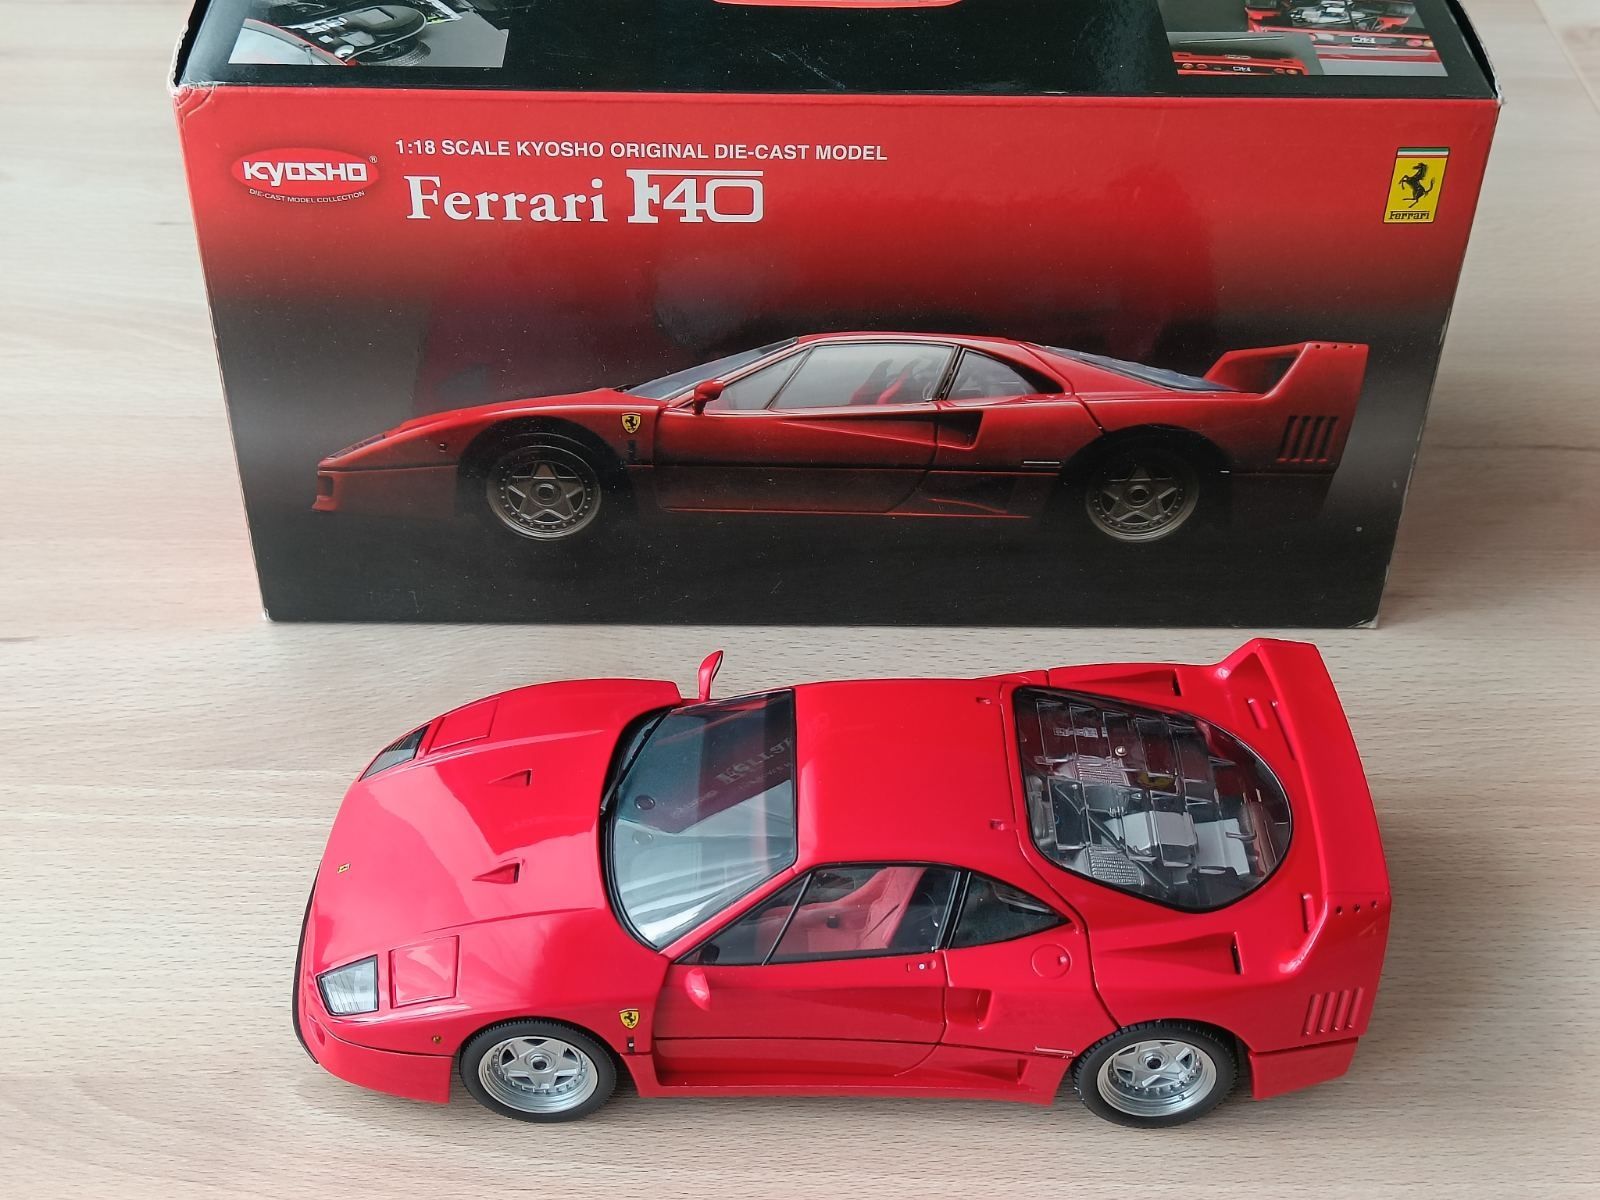 Ferrari F40, Kyosho 1:18